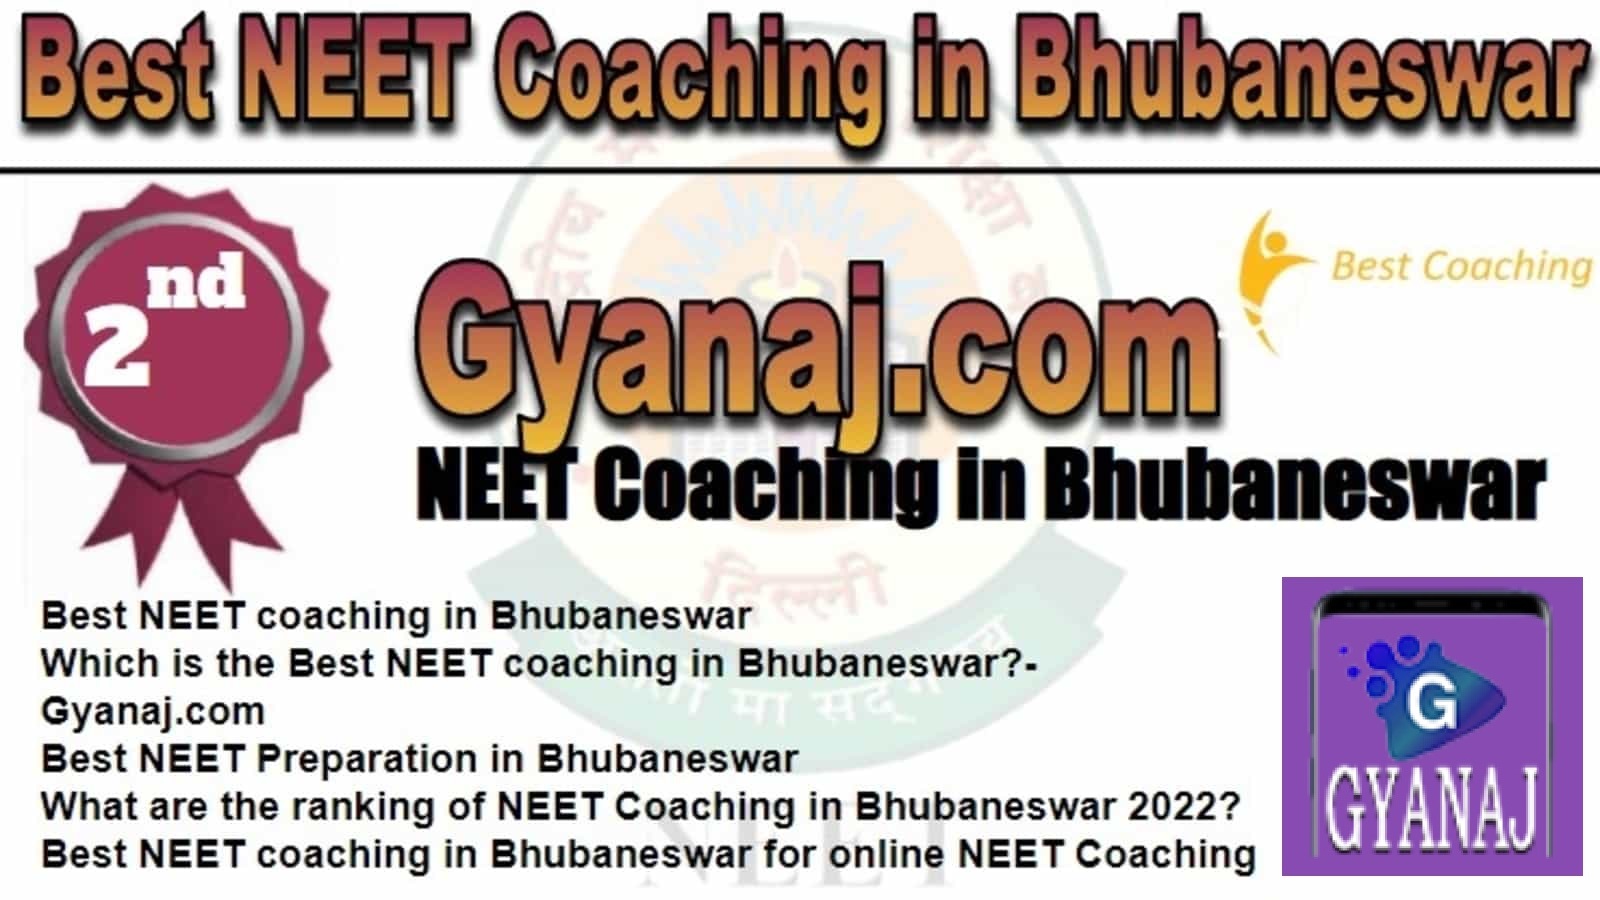 Rank 2 Best NEET Coaching in Bhubaneswar